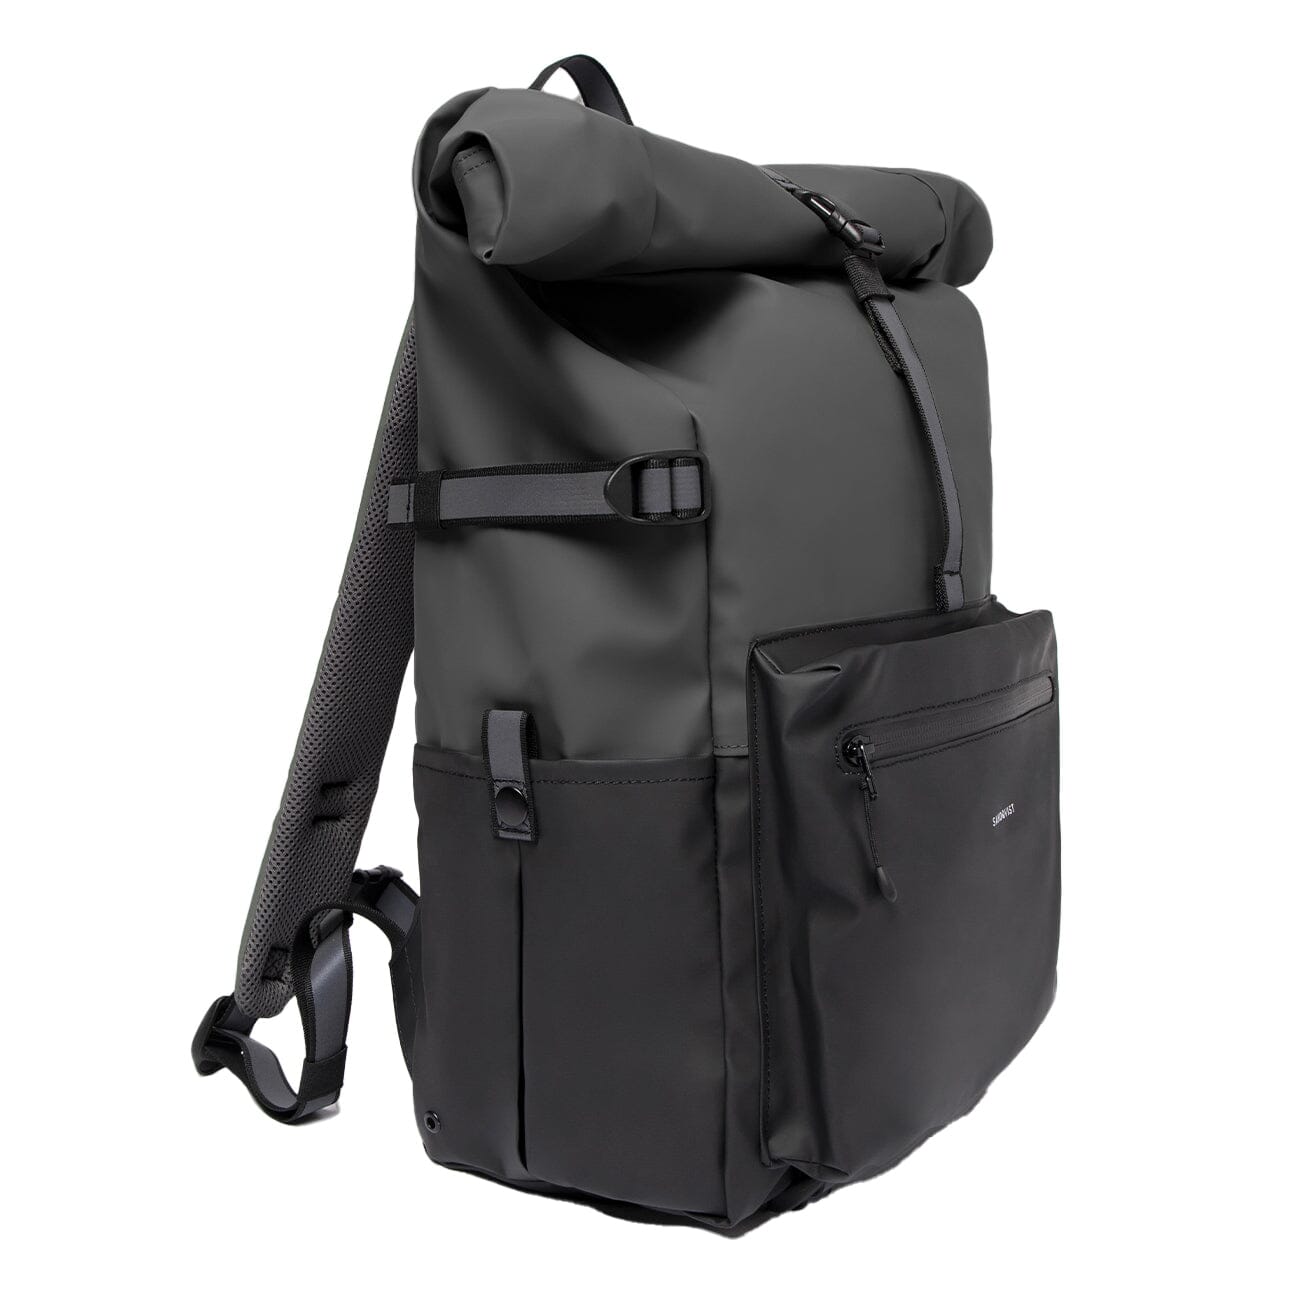 waterproof commuter backpack ruben 2 sandqvist multi dark color side view